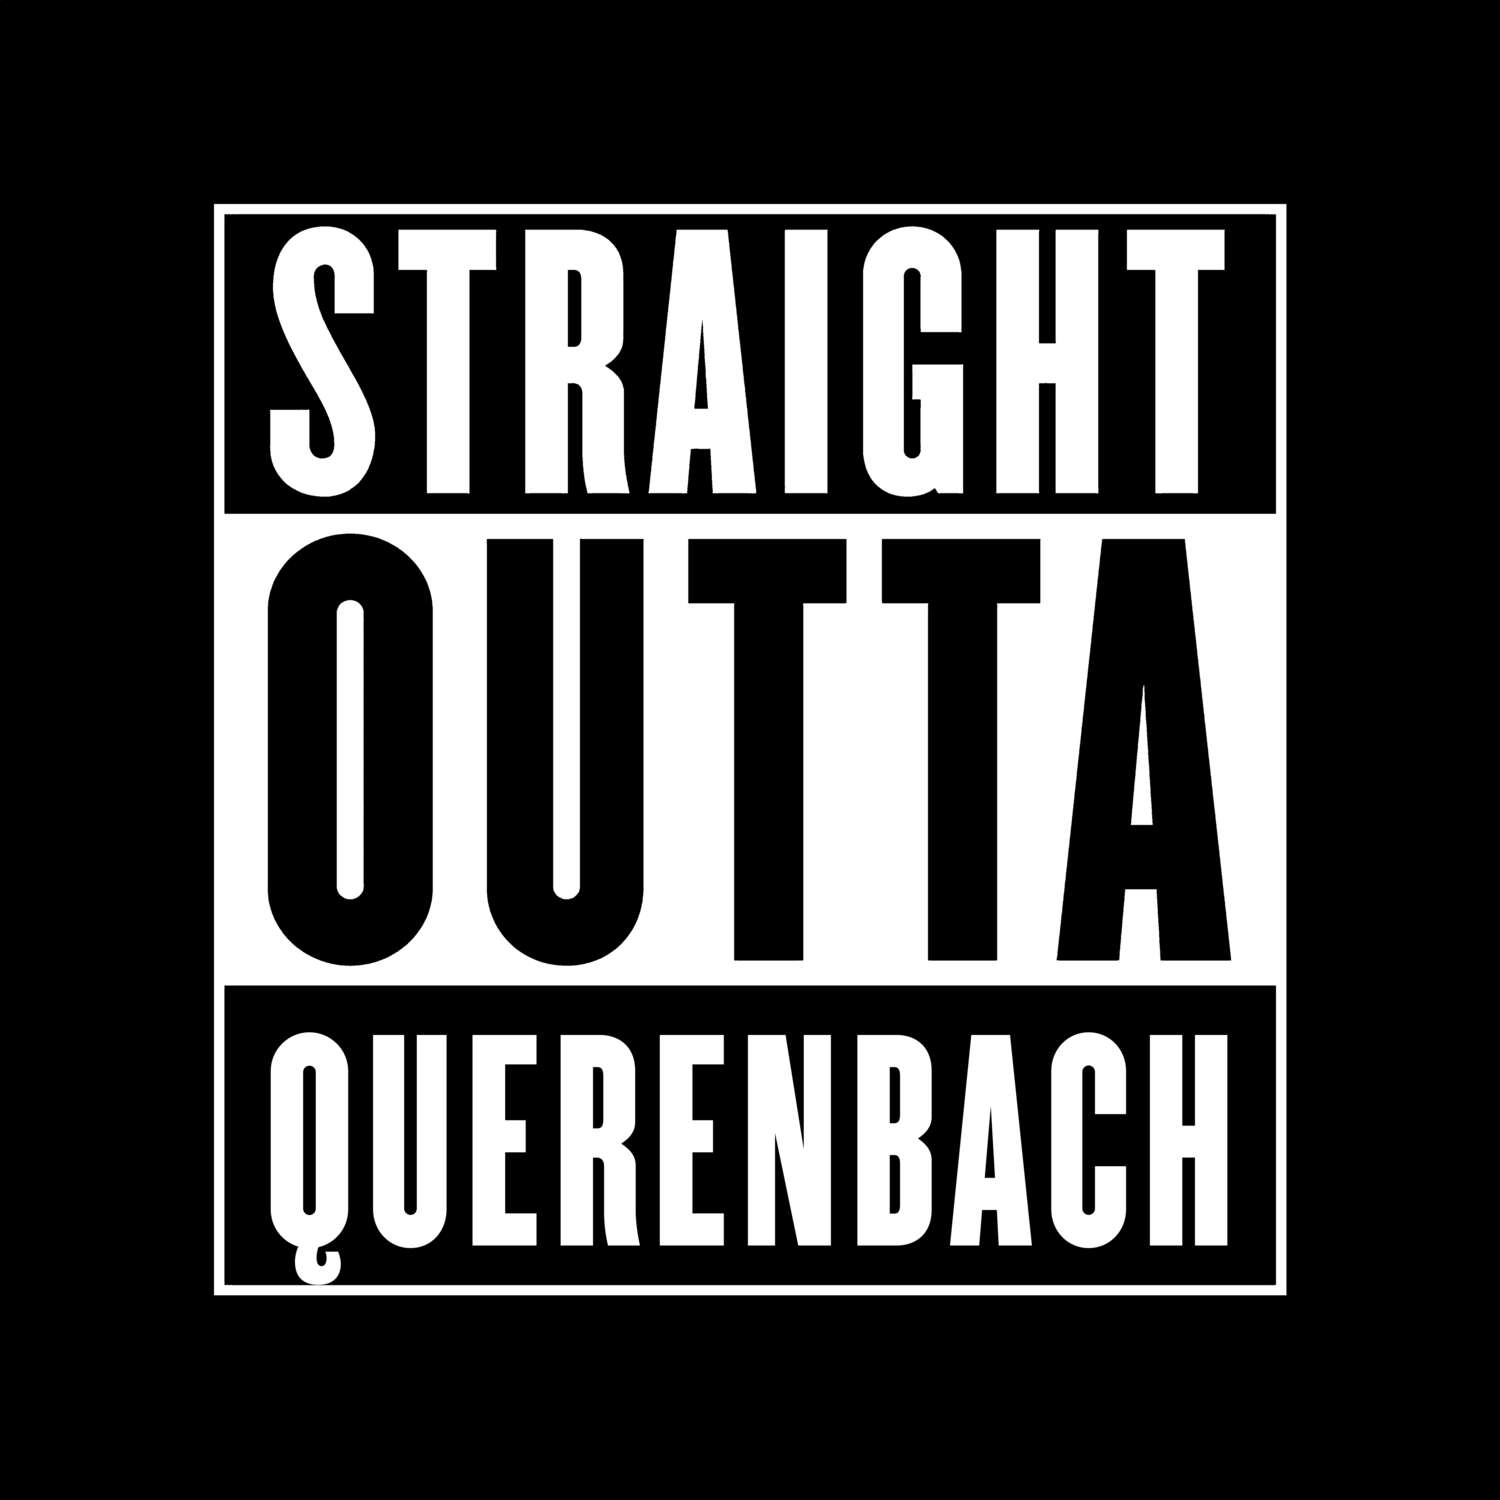 Querenbach T-Shirt »Straight Outta«